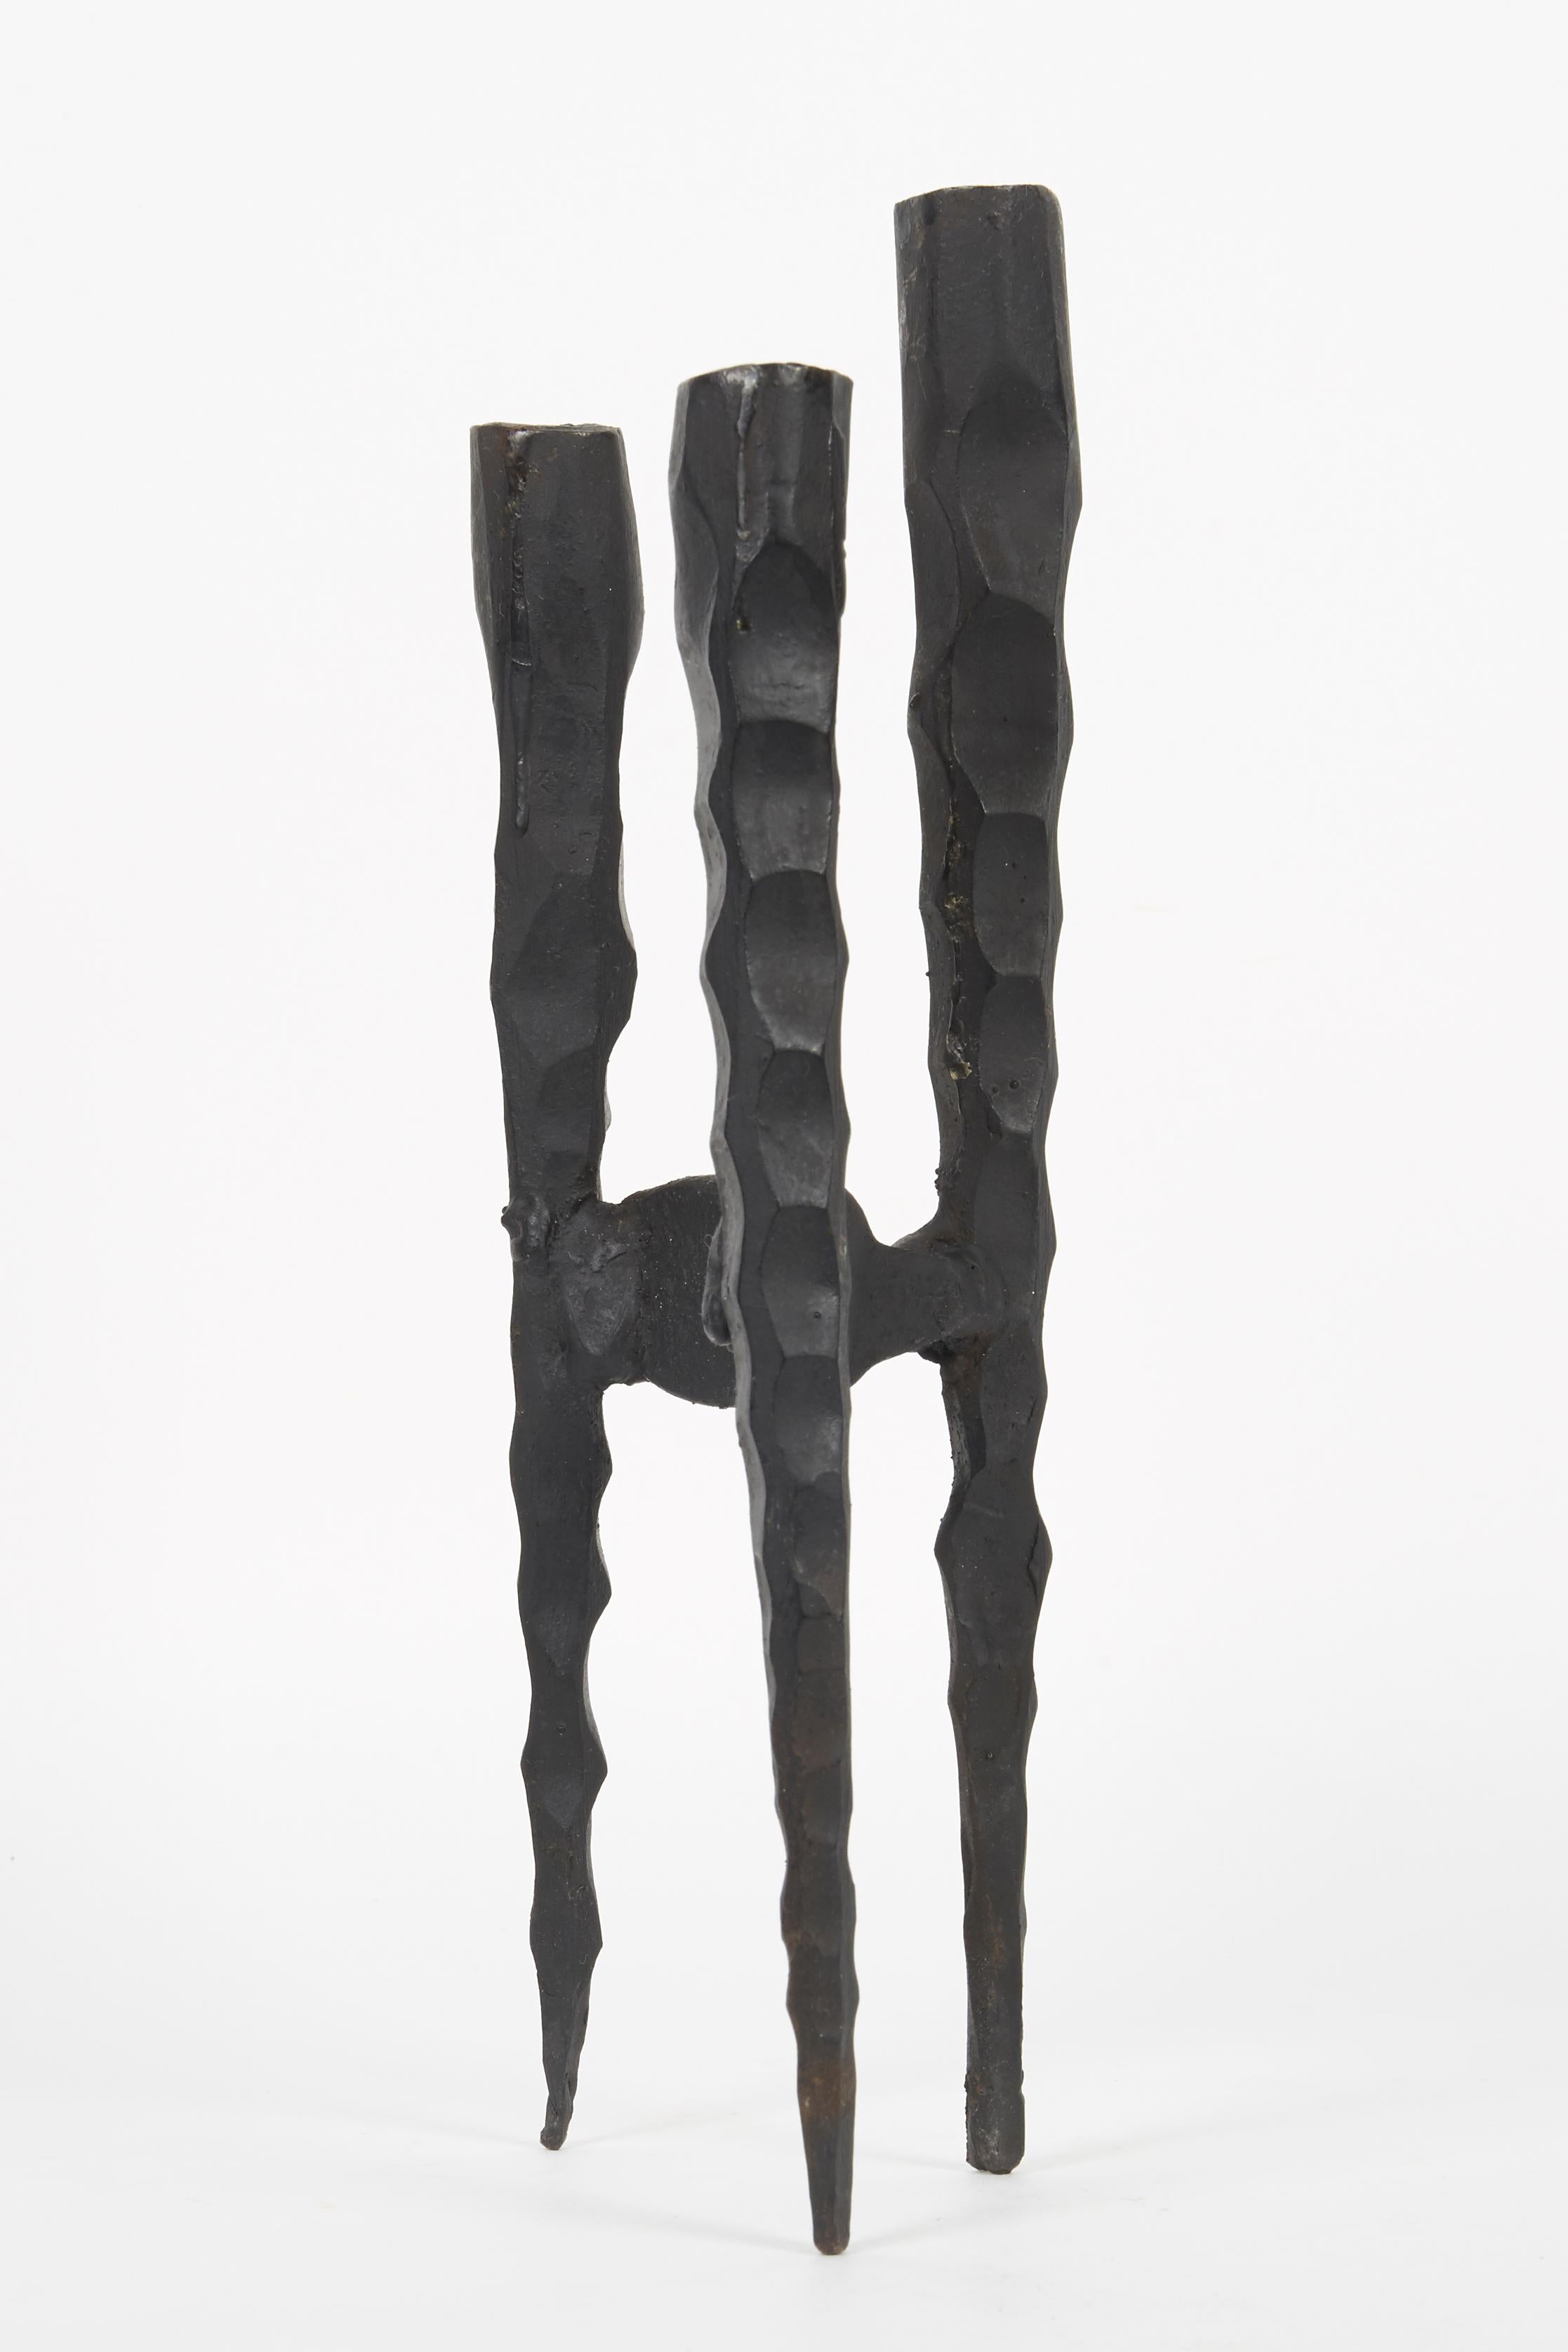 Israeli Mid-20th Century Brutalist Iron Shabbat Candlesticks by David Palombo For Sale